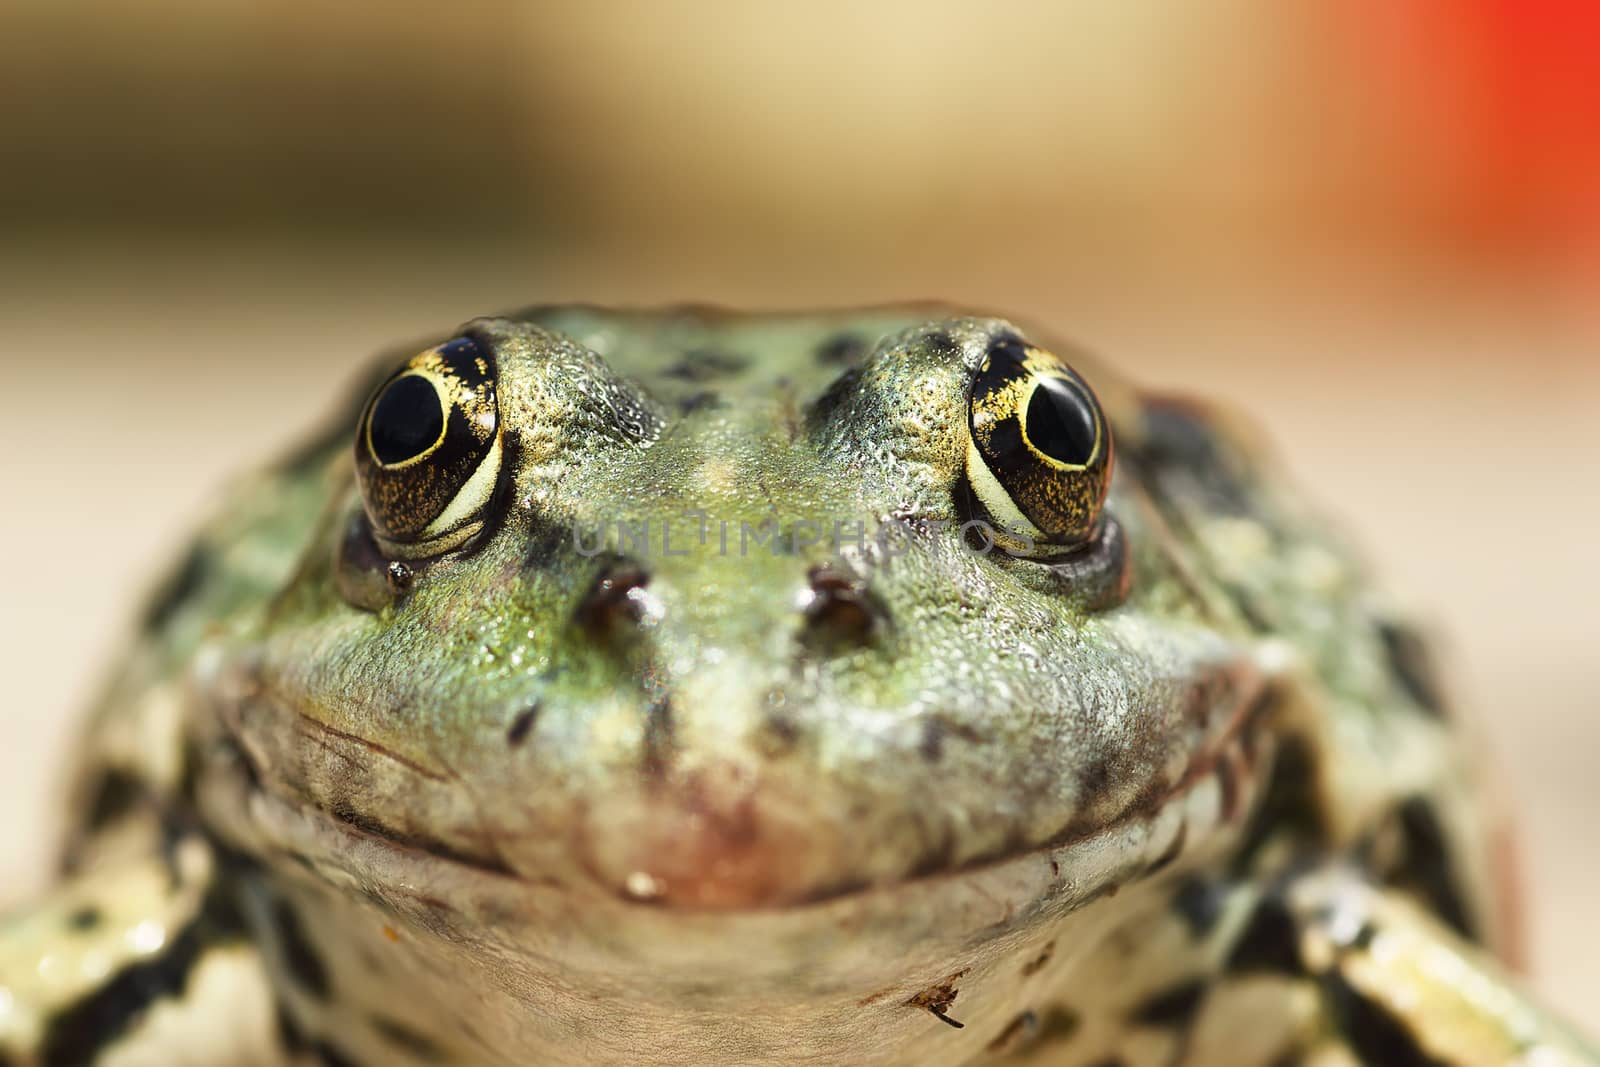 macro portrait of Pelophylax ridibundus, interesting angle of view on animal head ( the common european marsh frog )